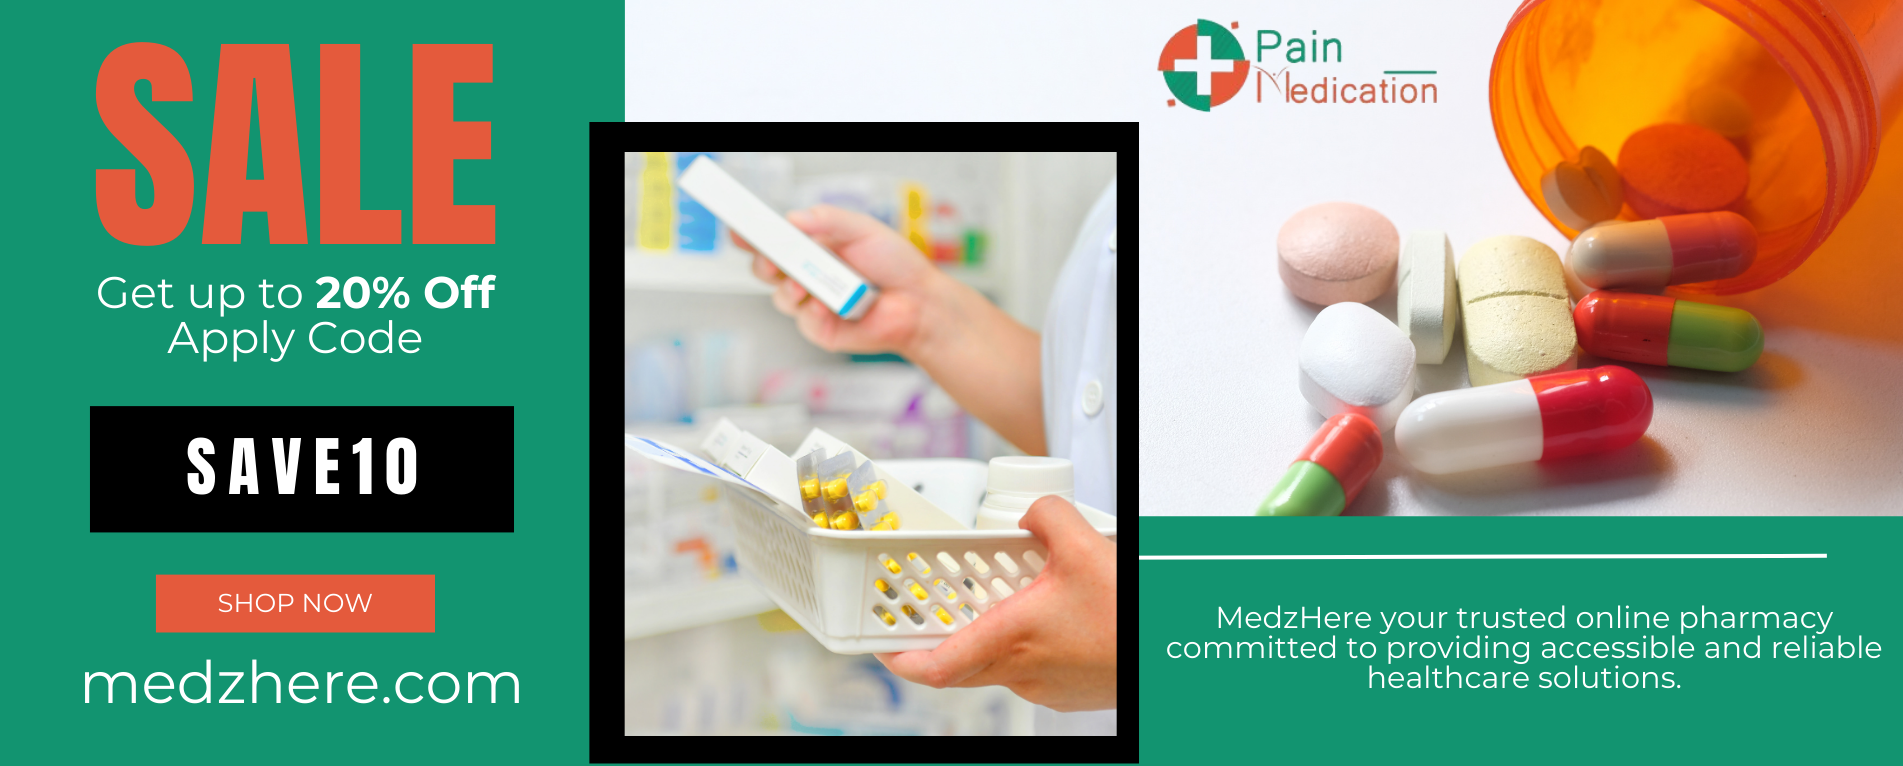 Secure Pharmacy - Pain Medication